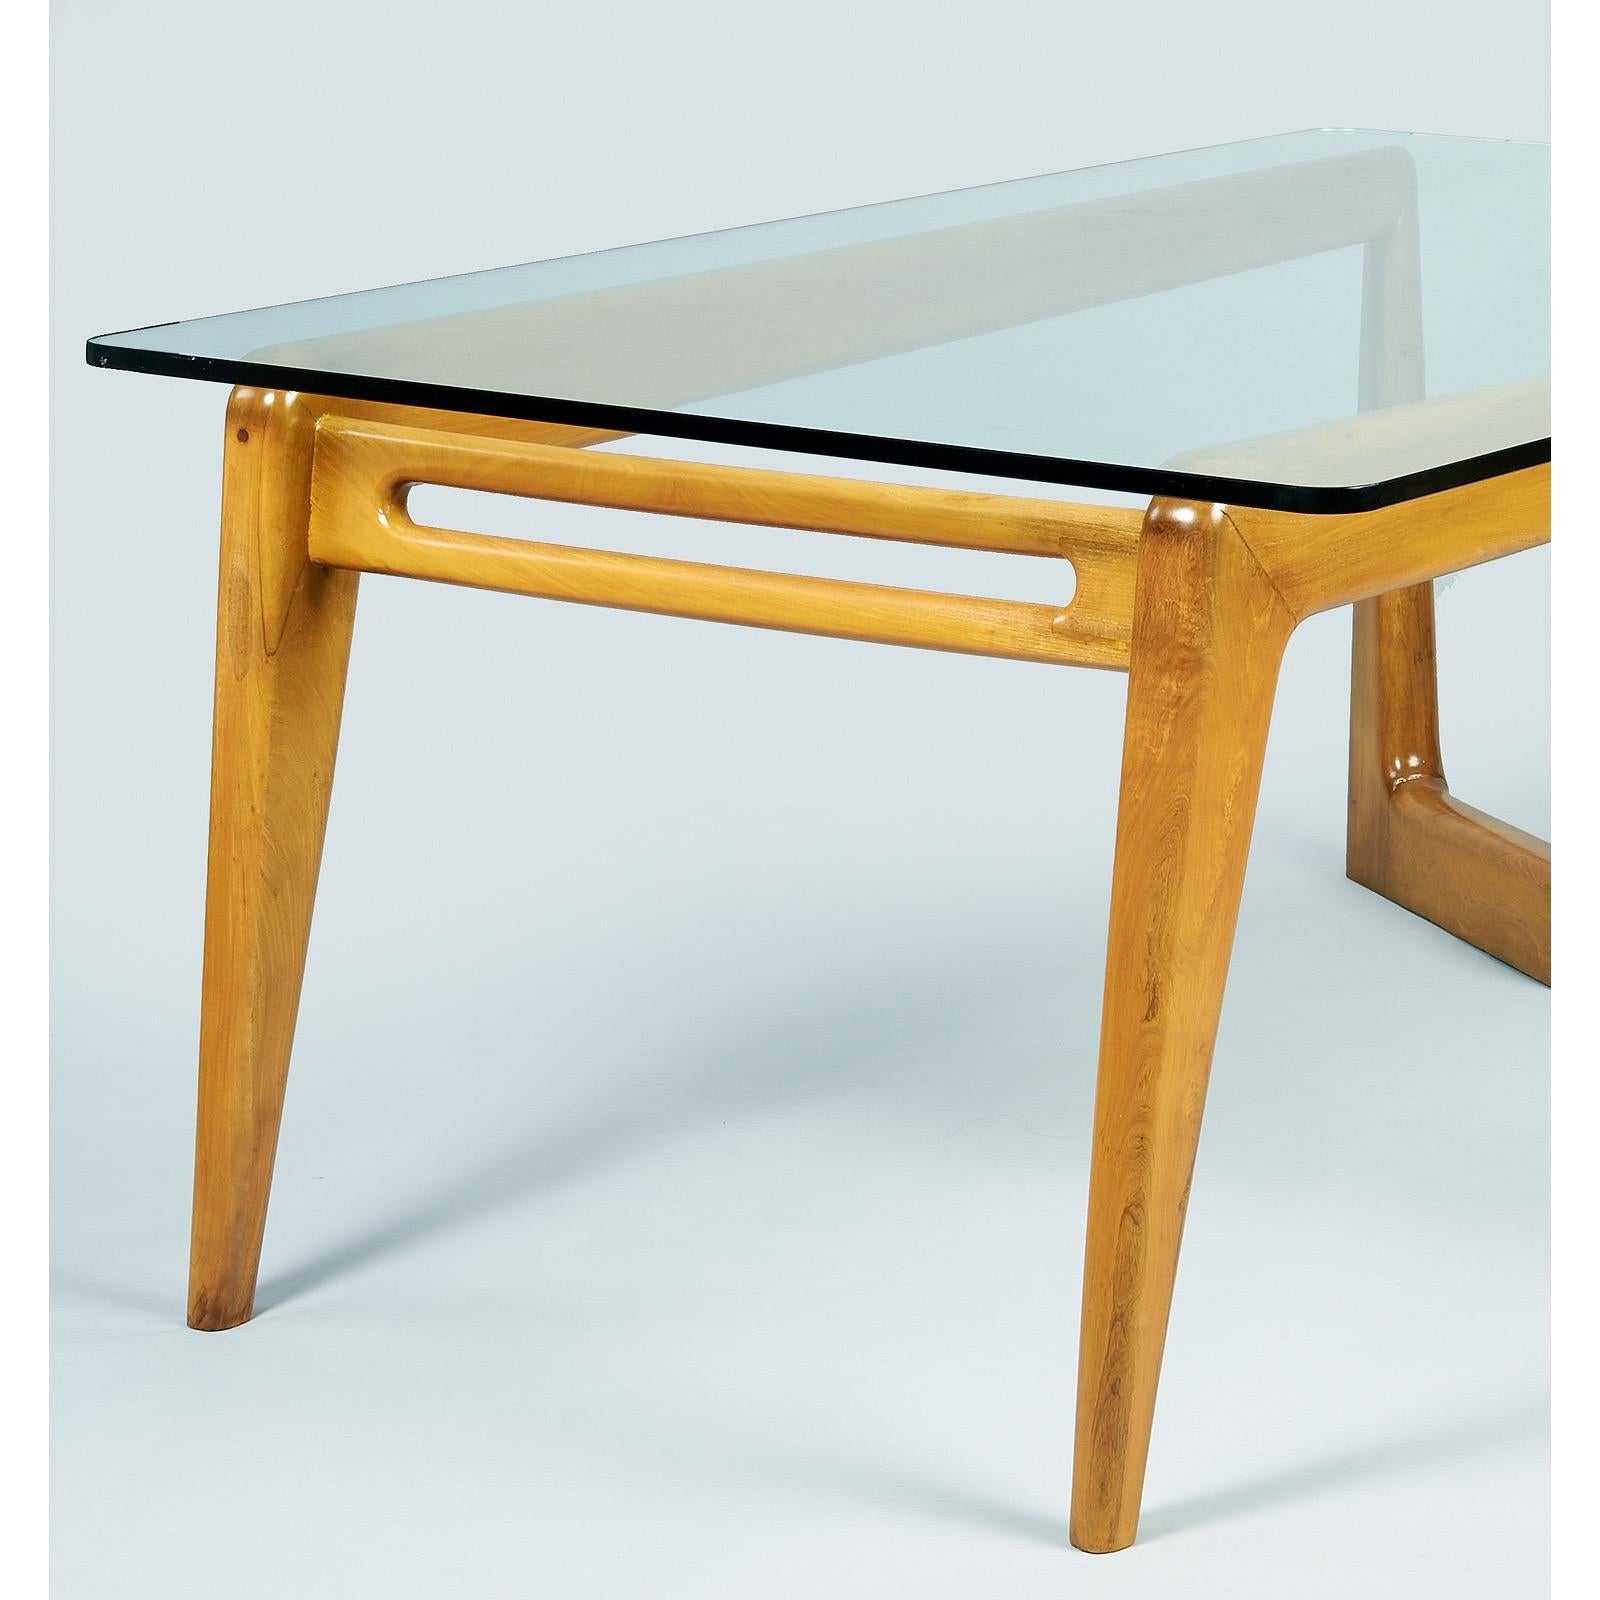 Pierluigi Giordani Monumental Biomorphic Dining Table, Wood + Glass, Italy 1950s For Sale 5